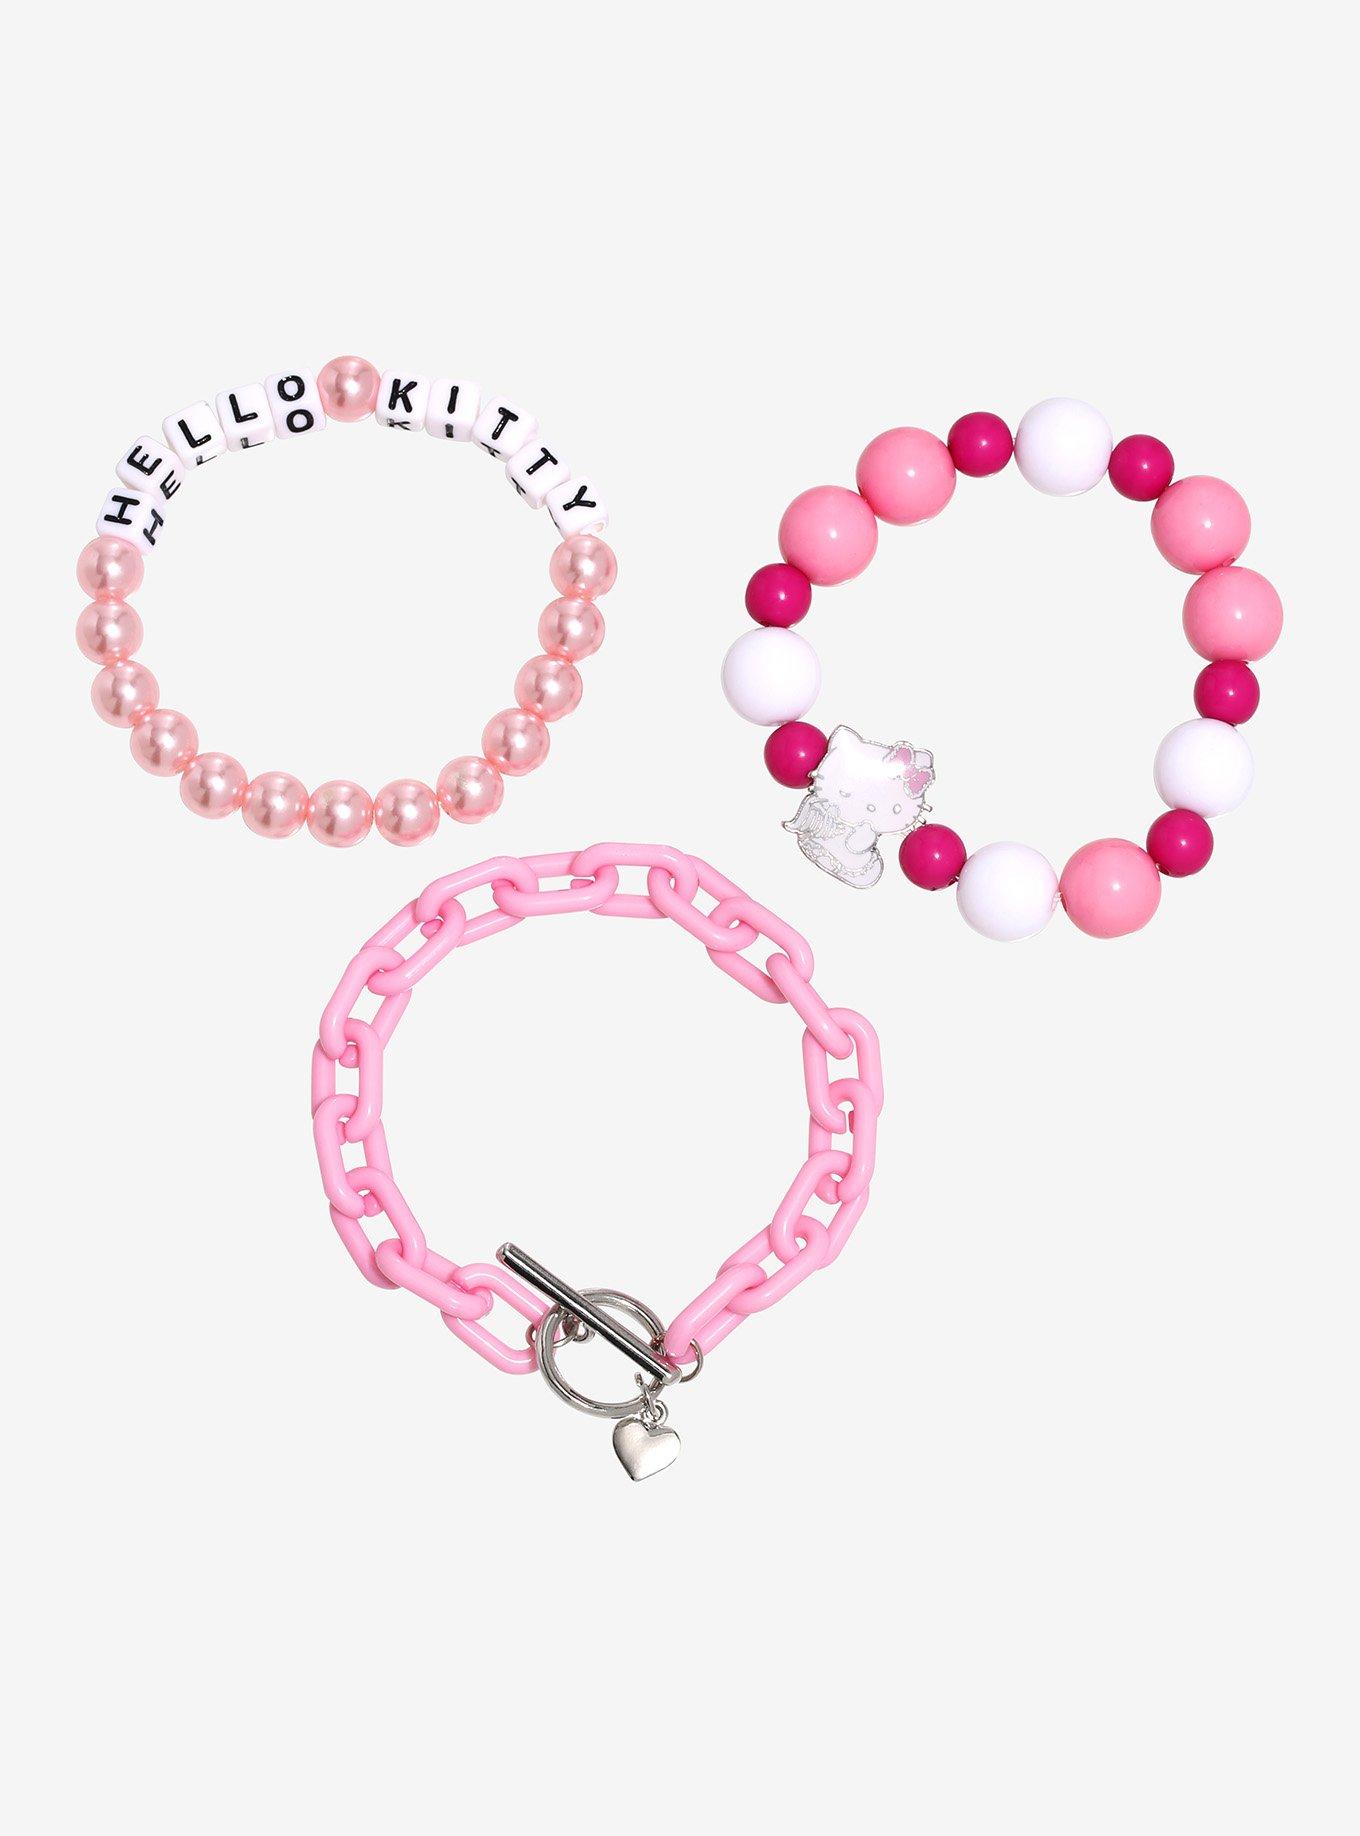 Hello Kitty Beaded Bracelet · A Loom Beaded Bracelet · Beadwork